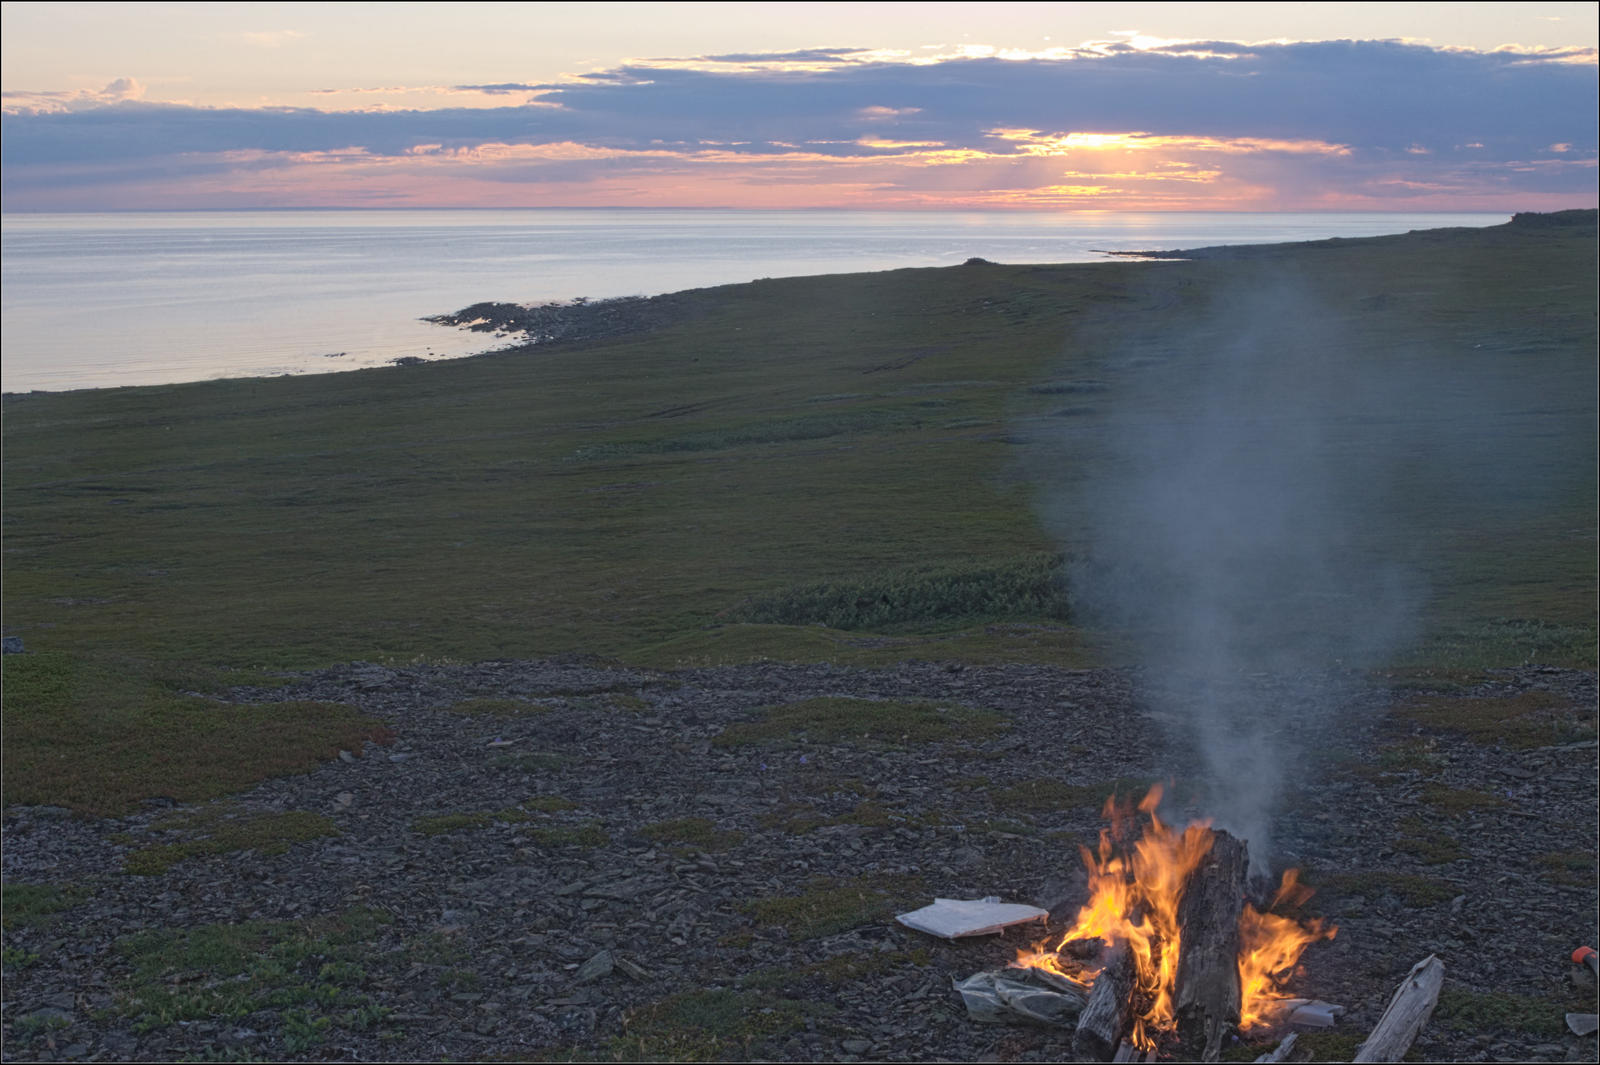 Bonfire in the tundra